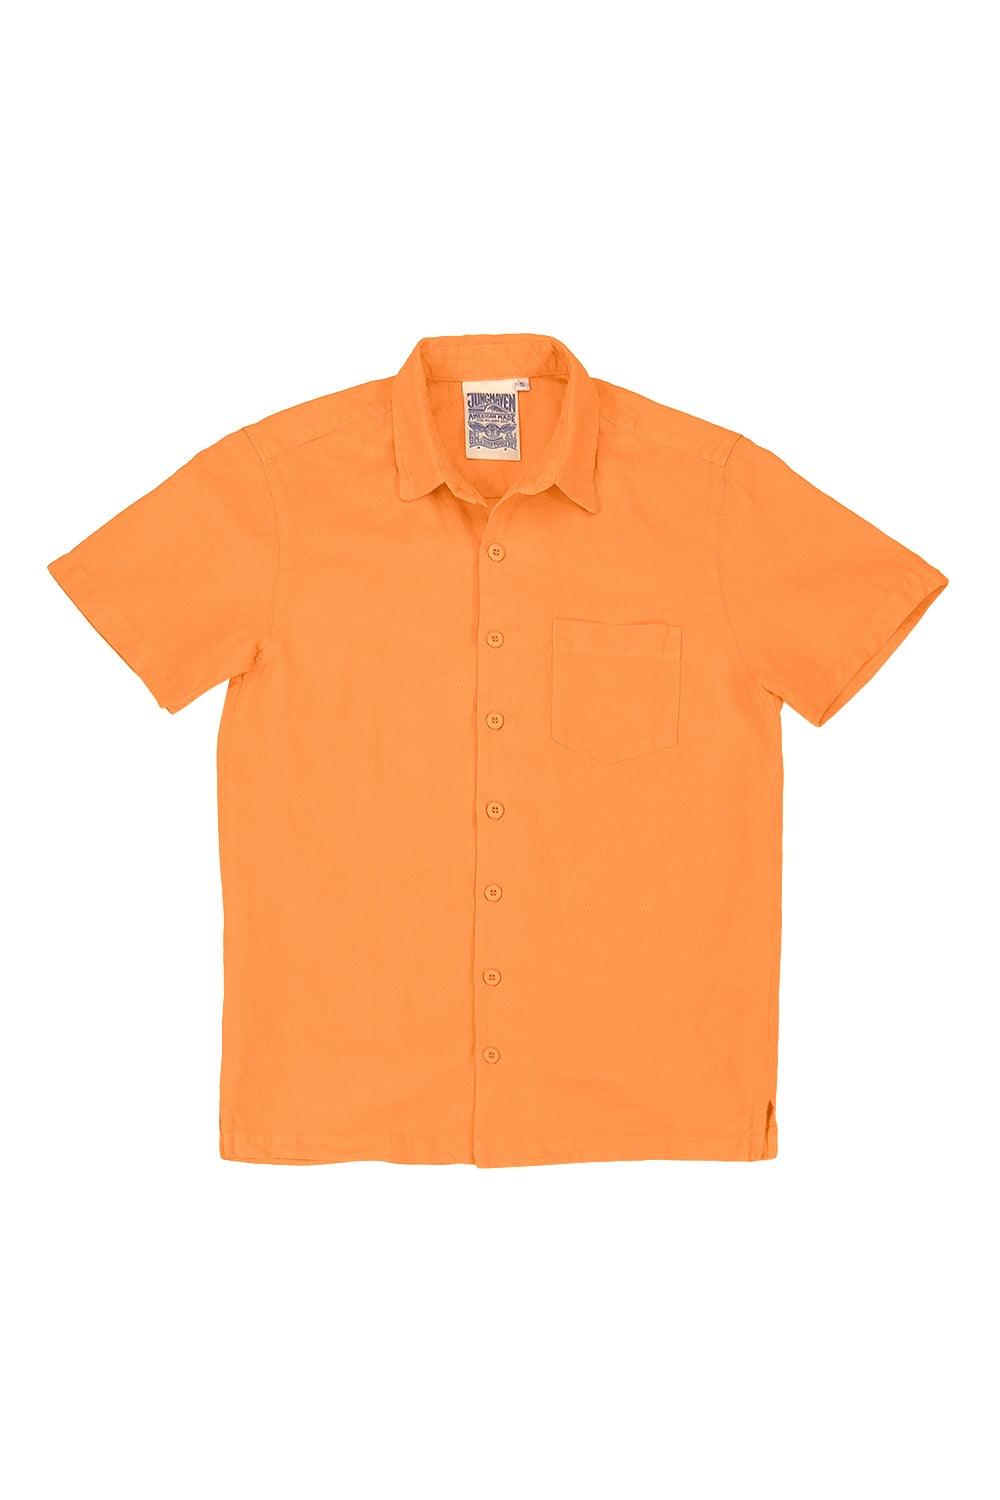 Rincon Shirt | Jungmaven Hemp Clothing & Accessories / Color: Apricot Crush